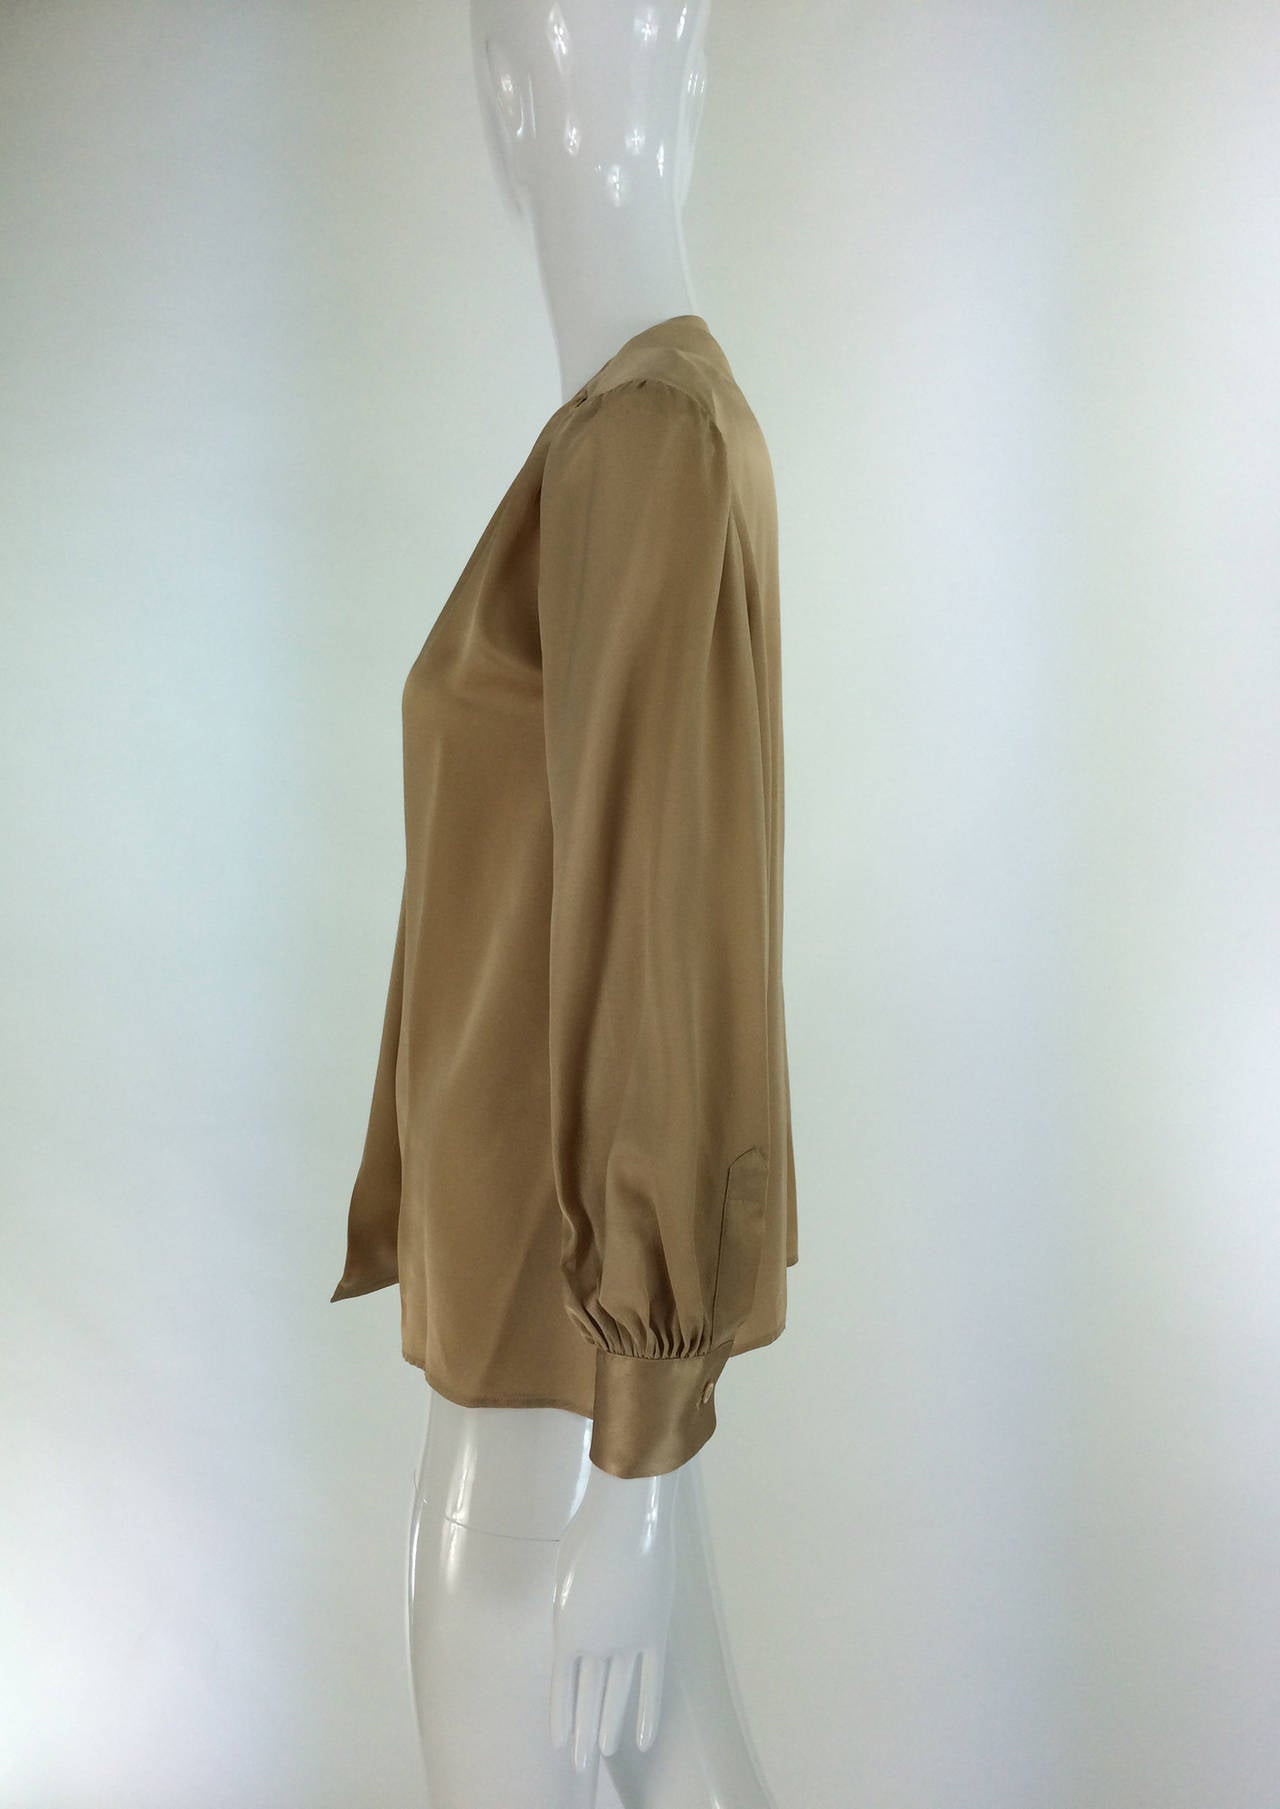 Yves St Laurent Rive Gauche gold silk charmeuse blouse 1990s 1